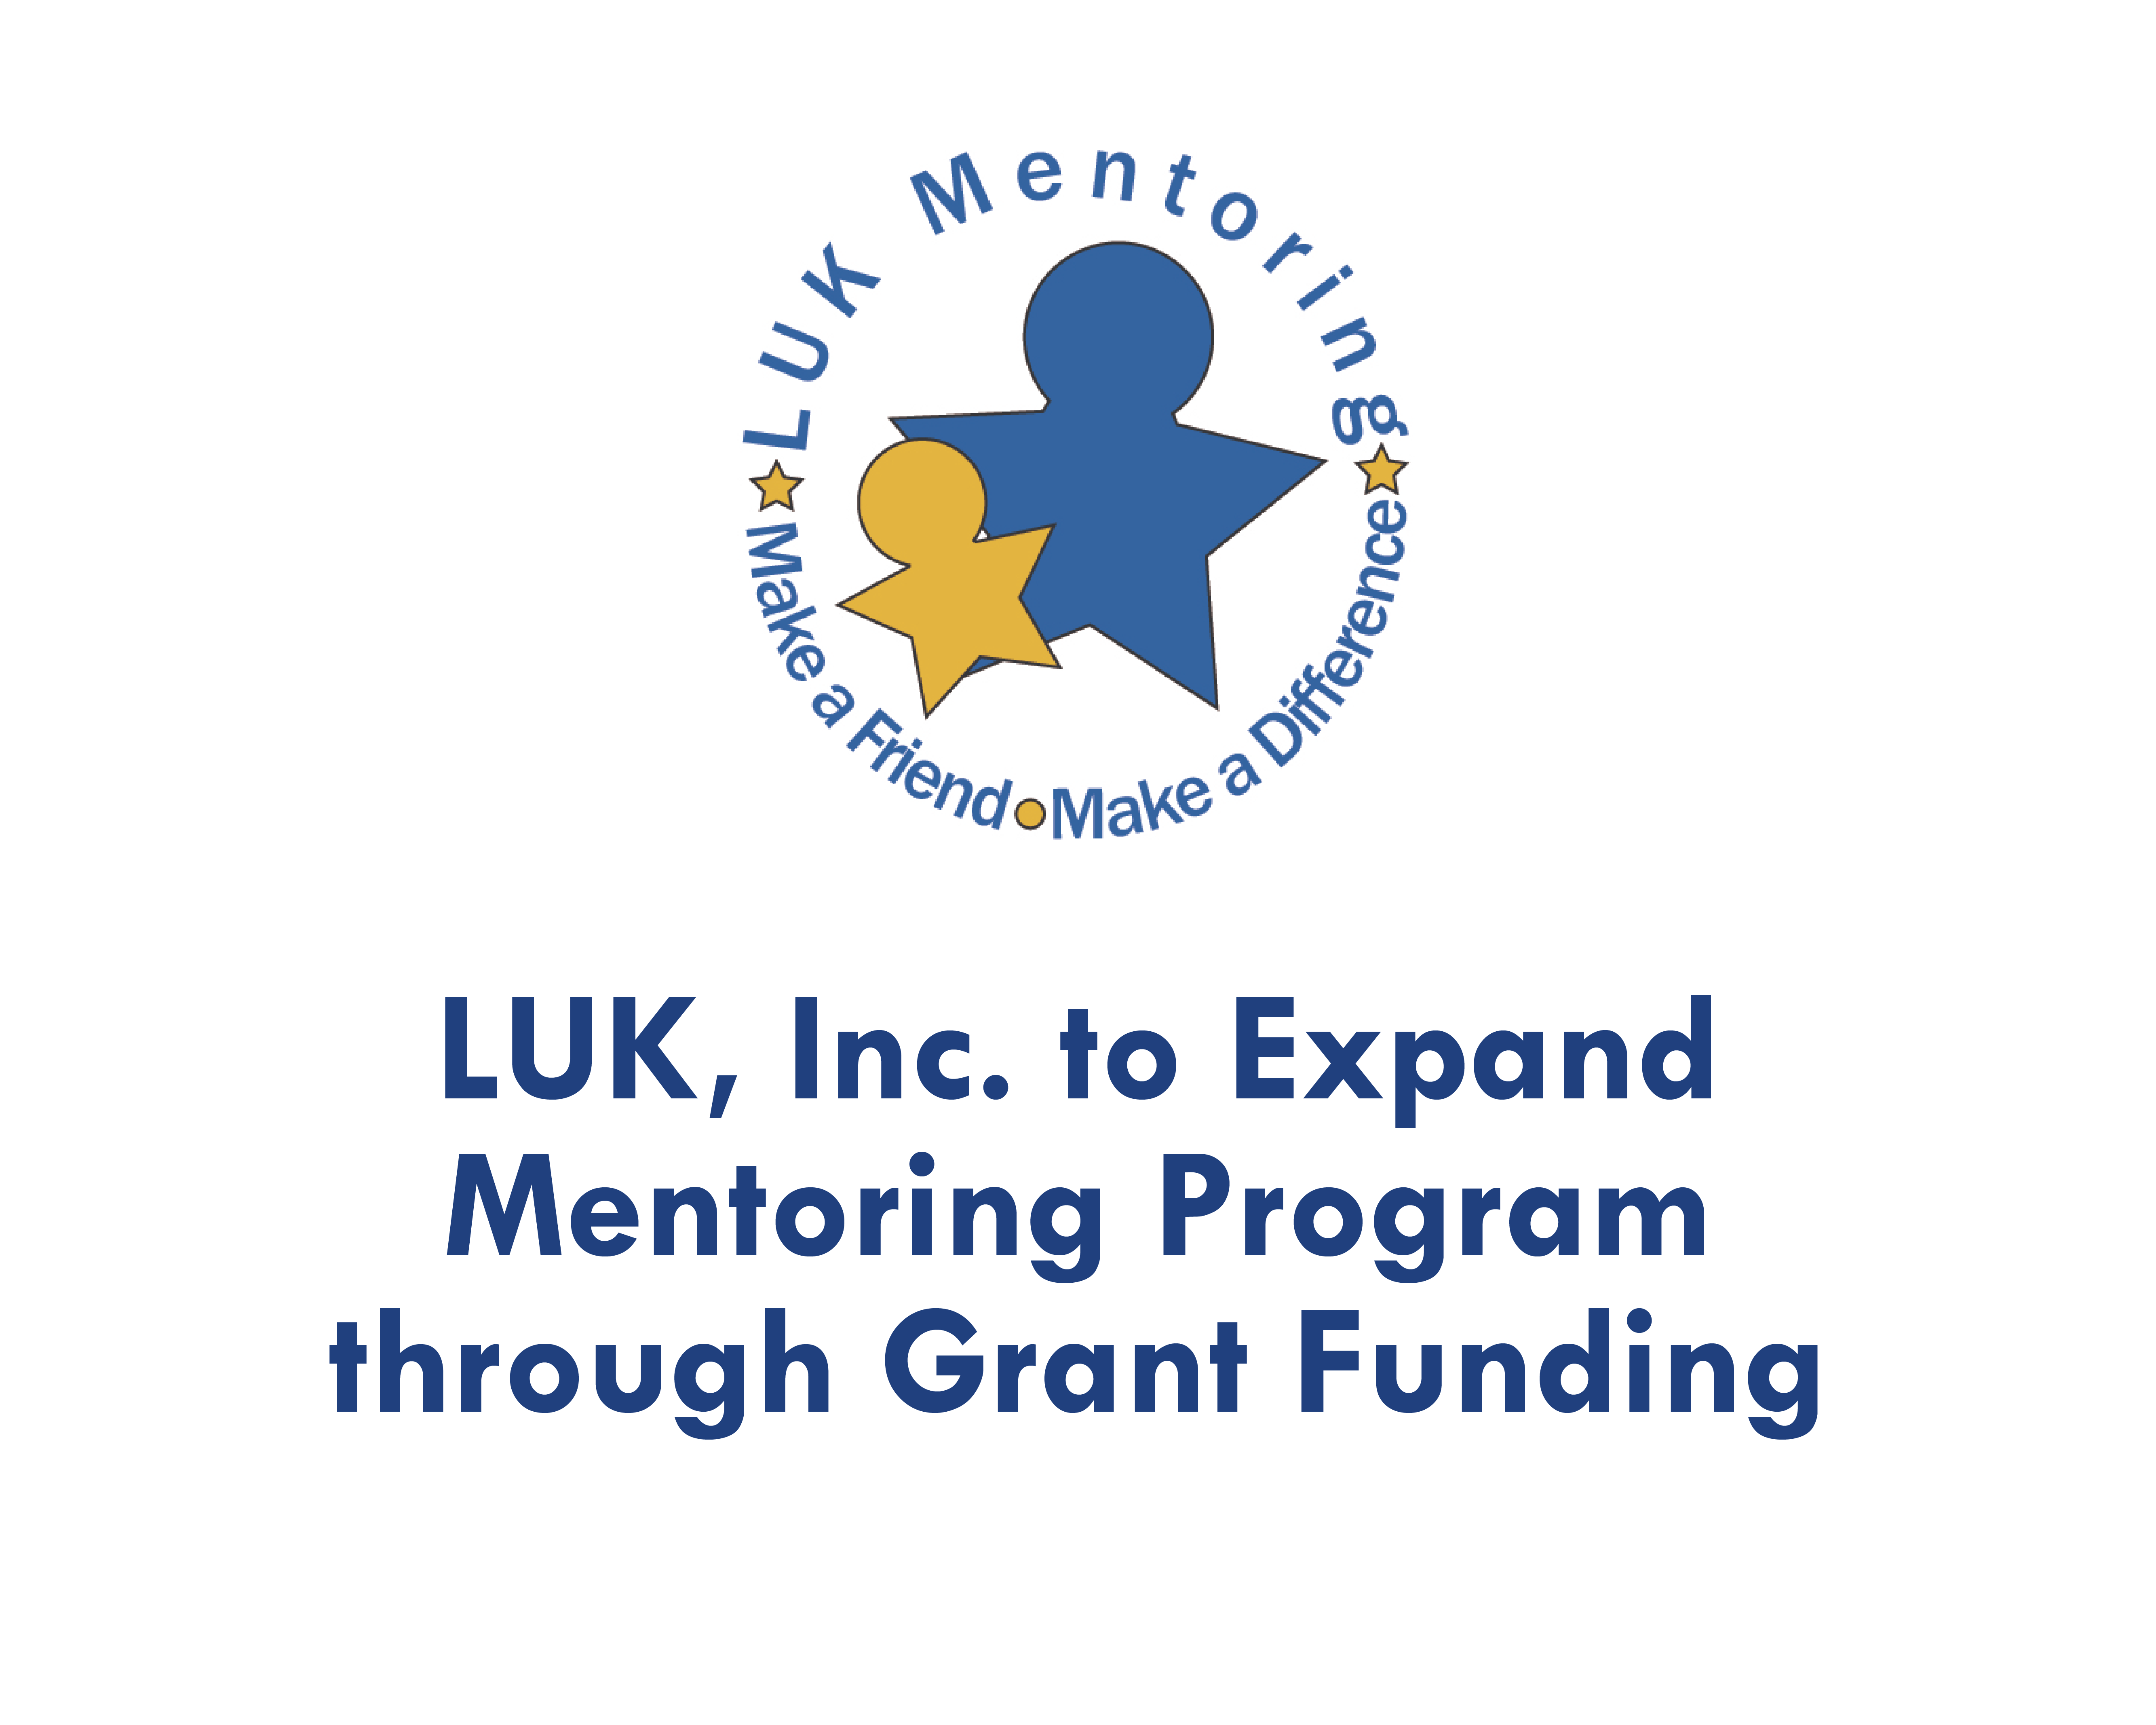 LUK Mentoring Logo and text that reads: LUK, Inc. to Expand Mentoring Program through Grant Funding